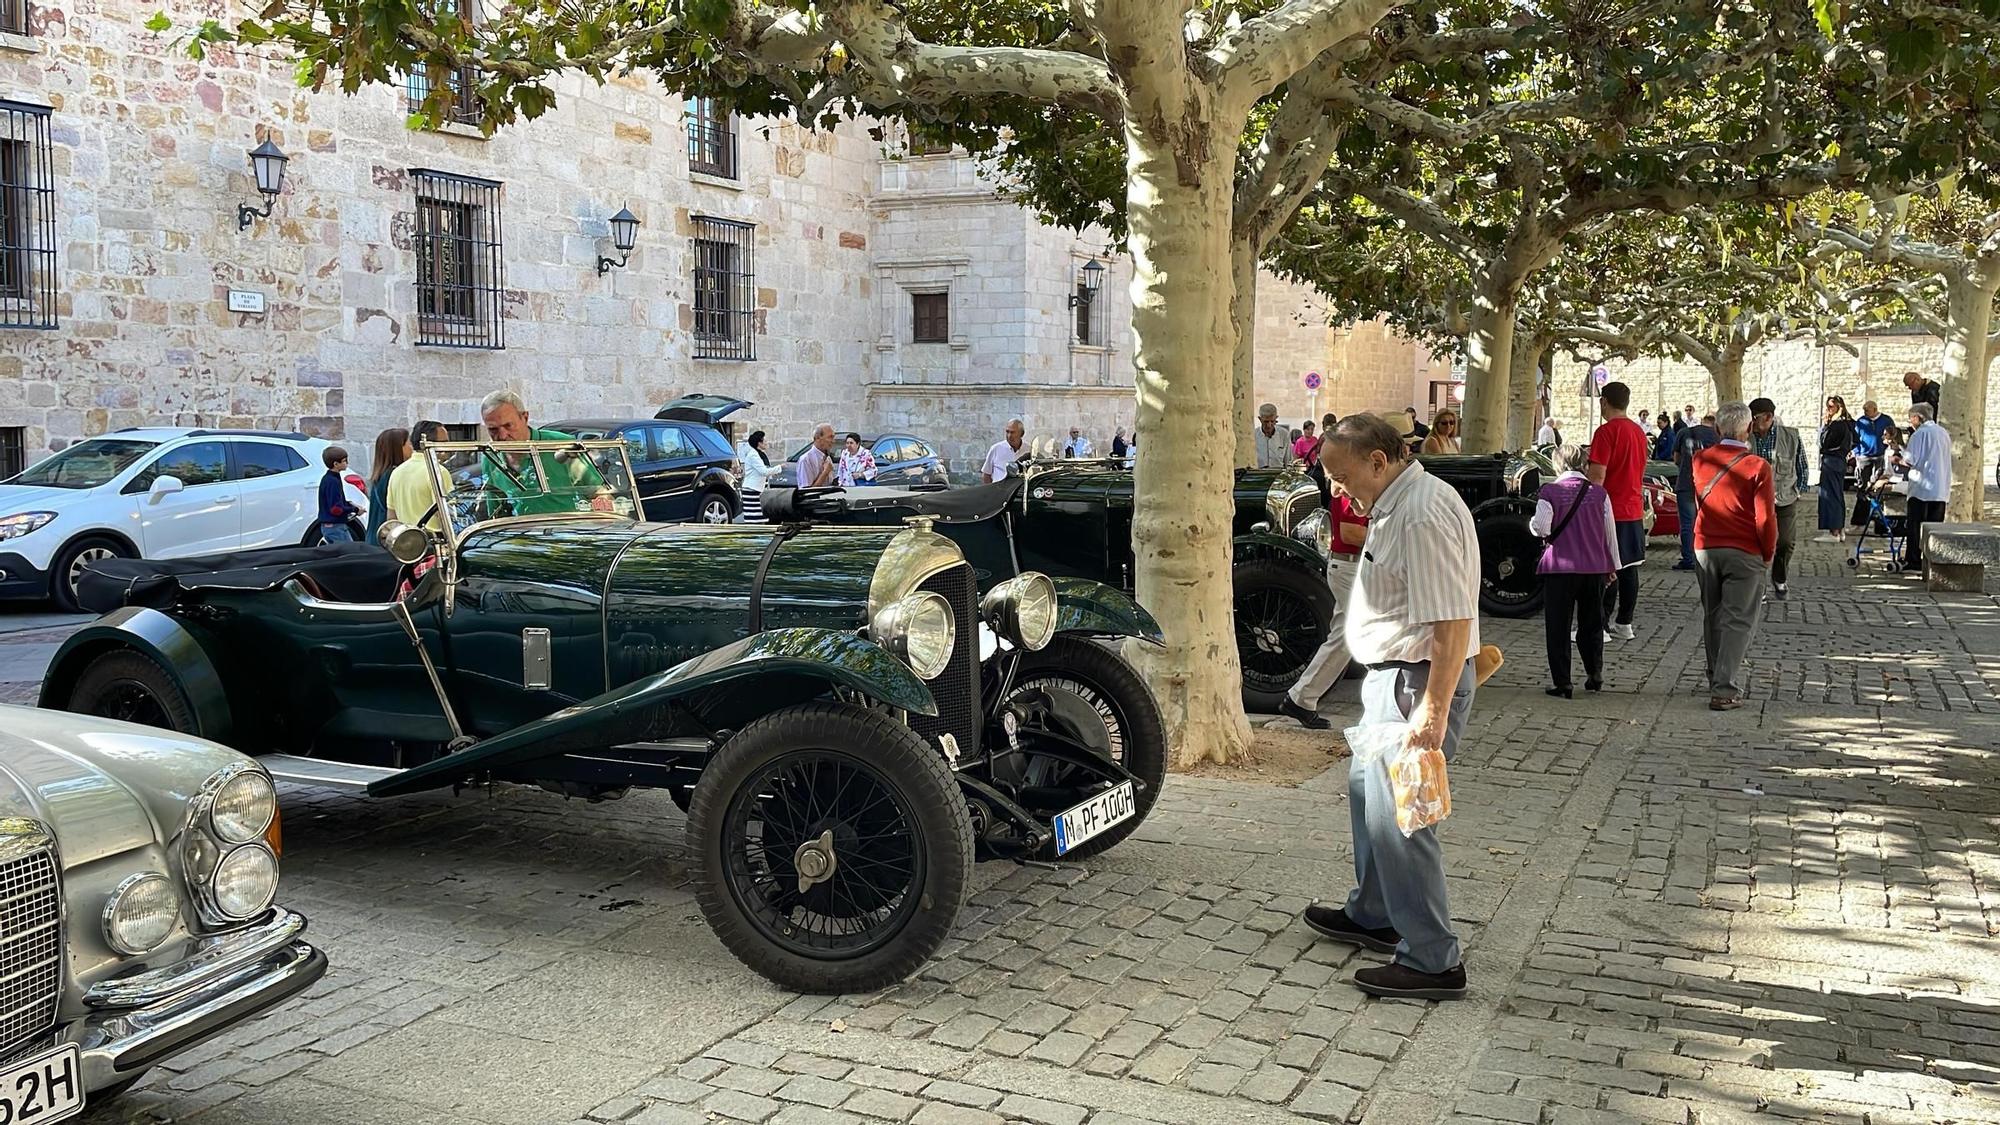 GALERÍA | Zamora, convertida en un expositor de coches antiguos extranjeros